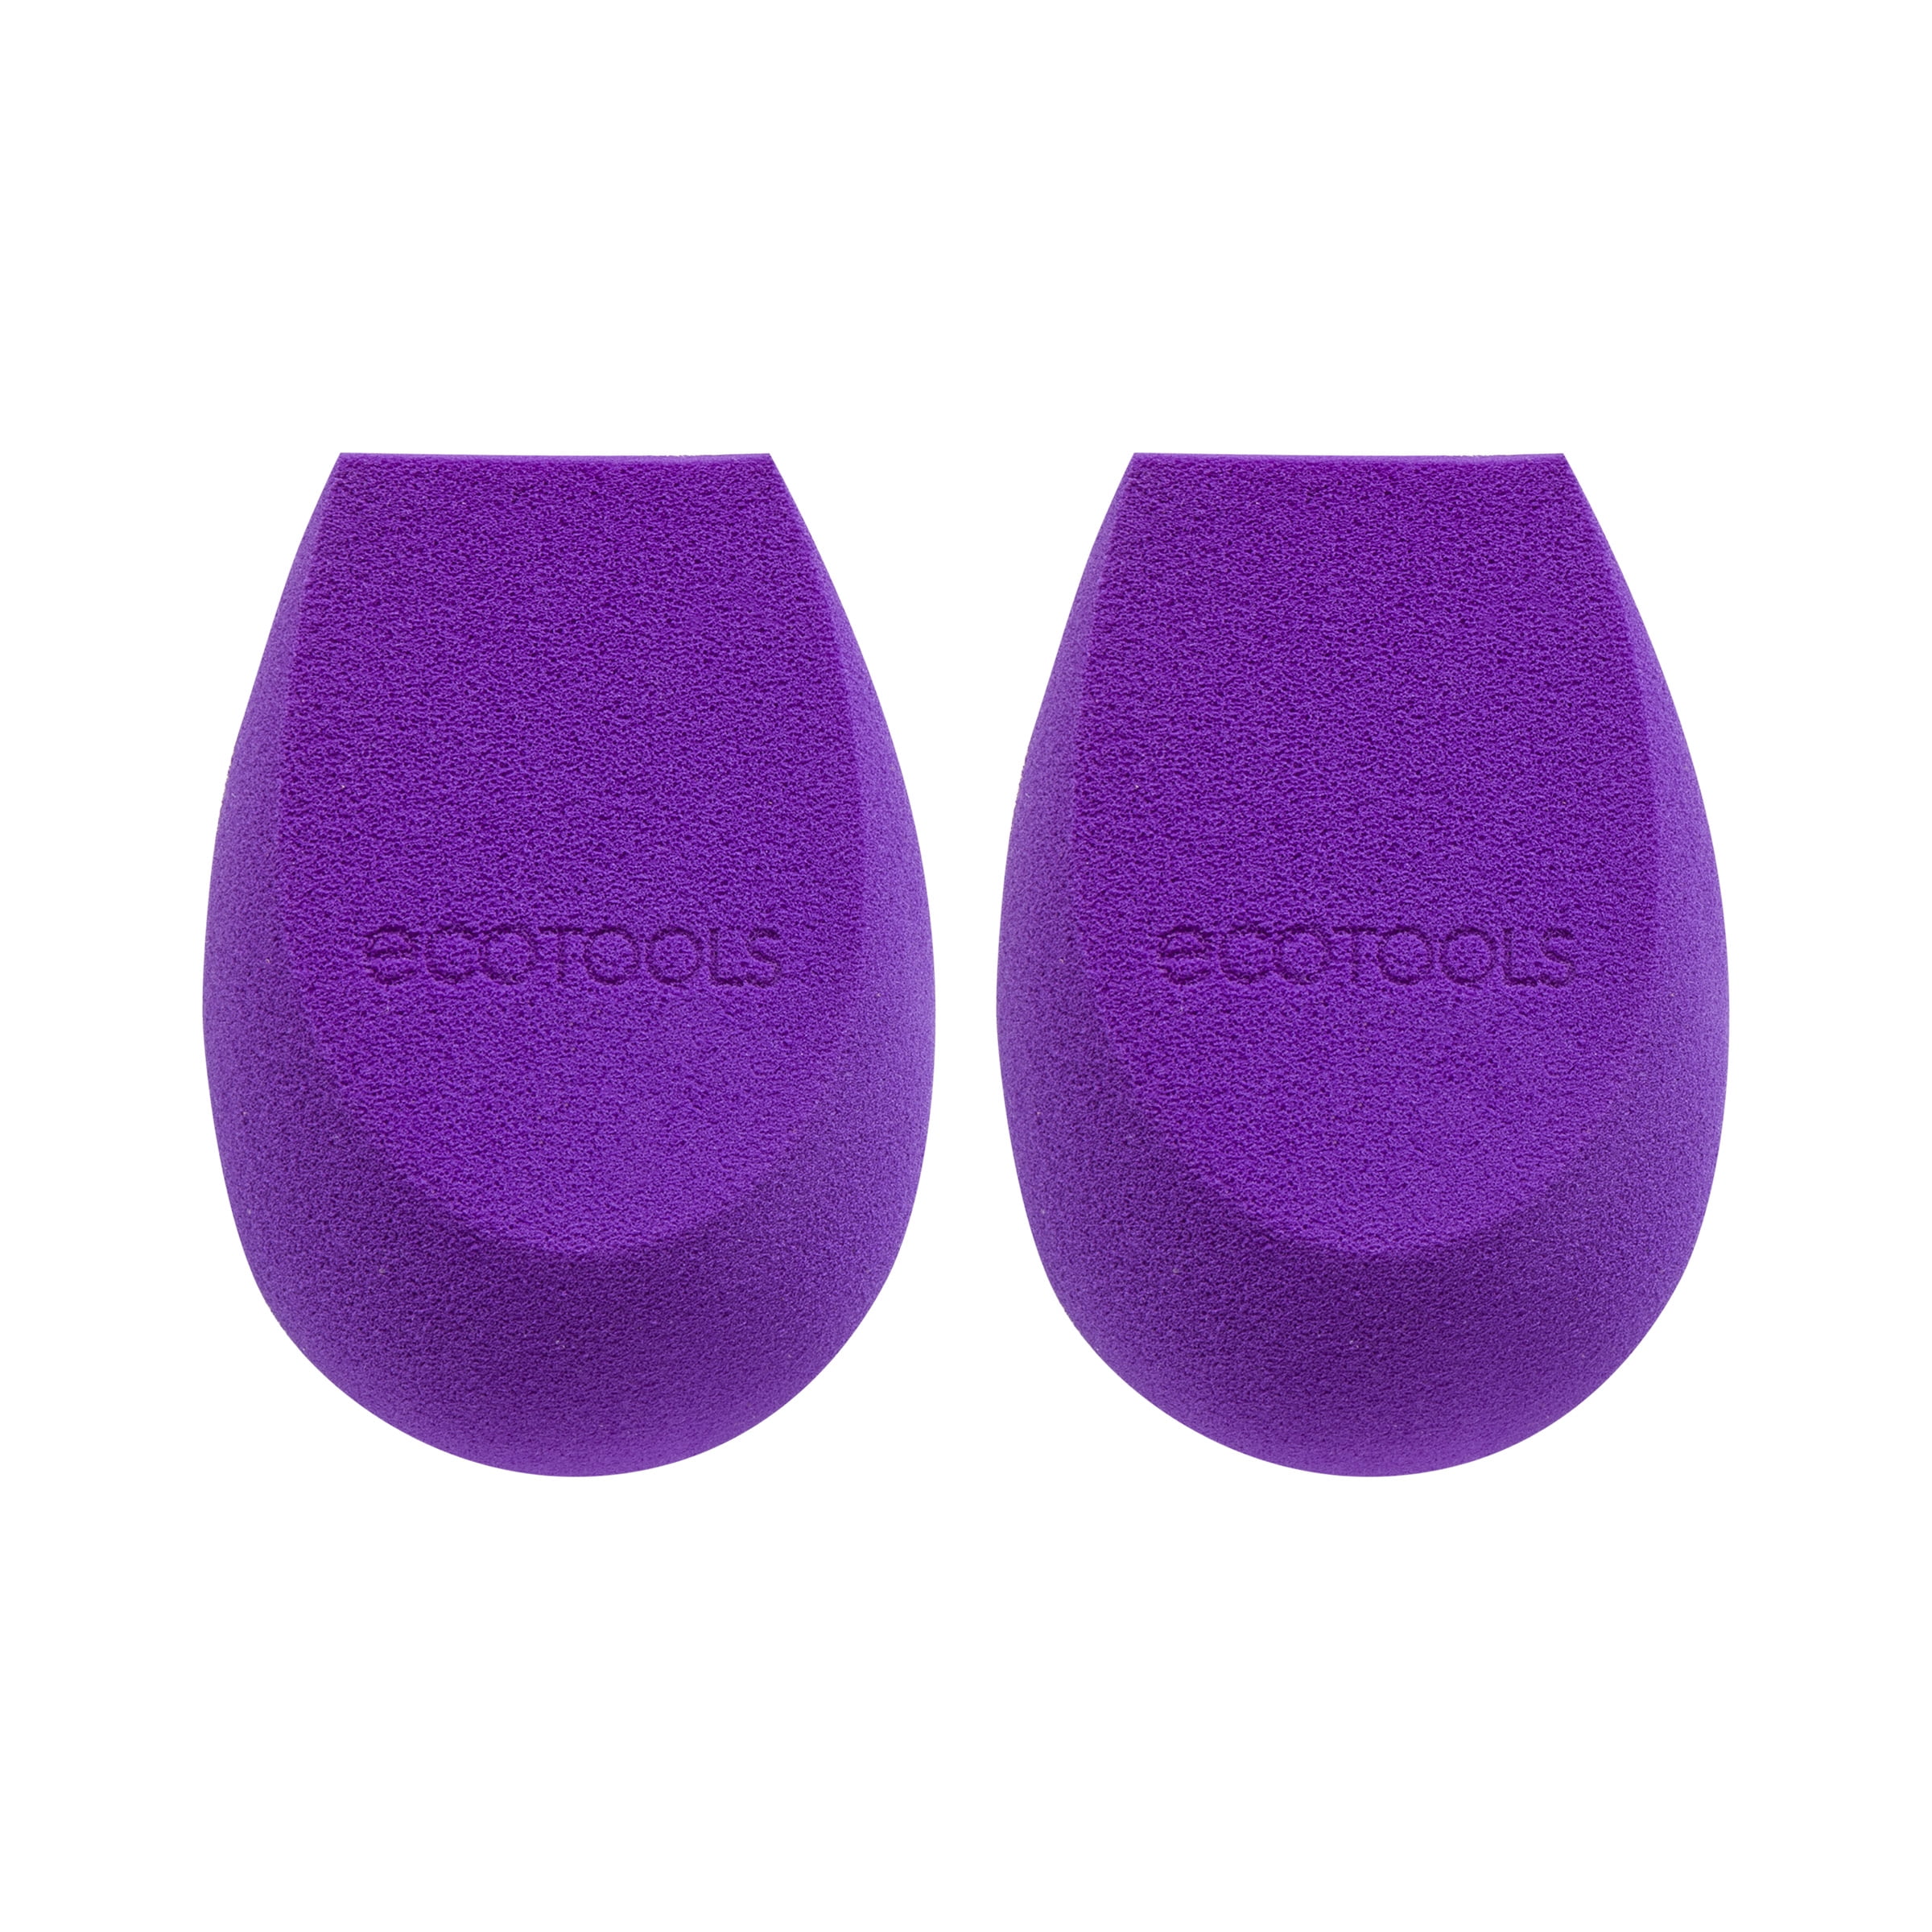 EcoTools Bioblender Makeup Sponge Duo, For Liquid and Cream Foundation, Biodegradable, 2 Count